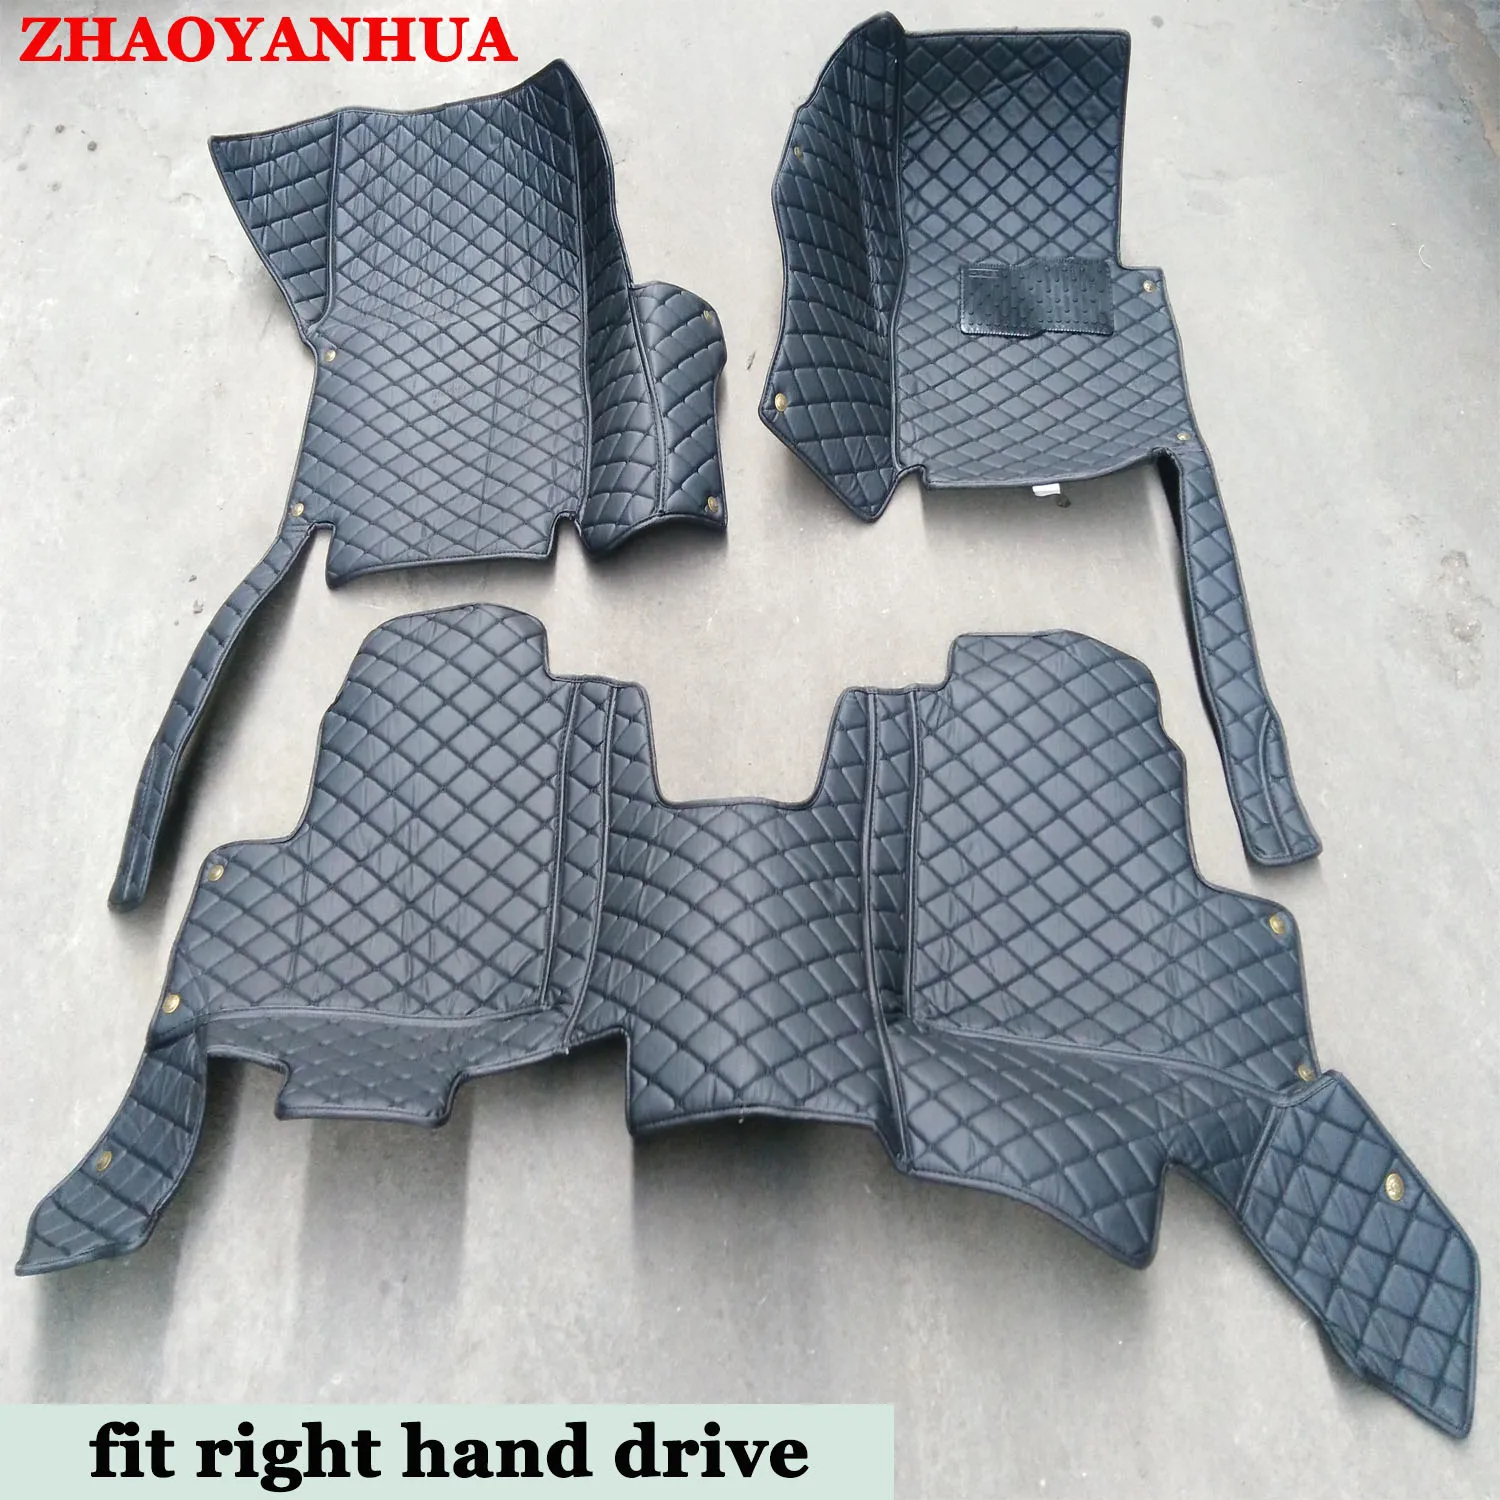 

Right hand drive car floor mats for Audi A1 A3 A4 A5 A6 A7 A8 A8L Q3 Q5 Q7 TT R8 car-styling leather accessories carpet liners